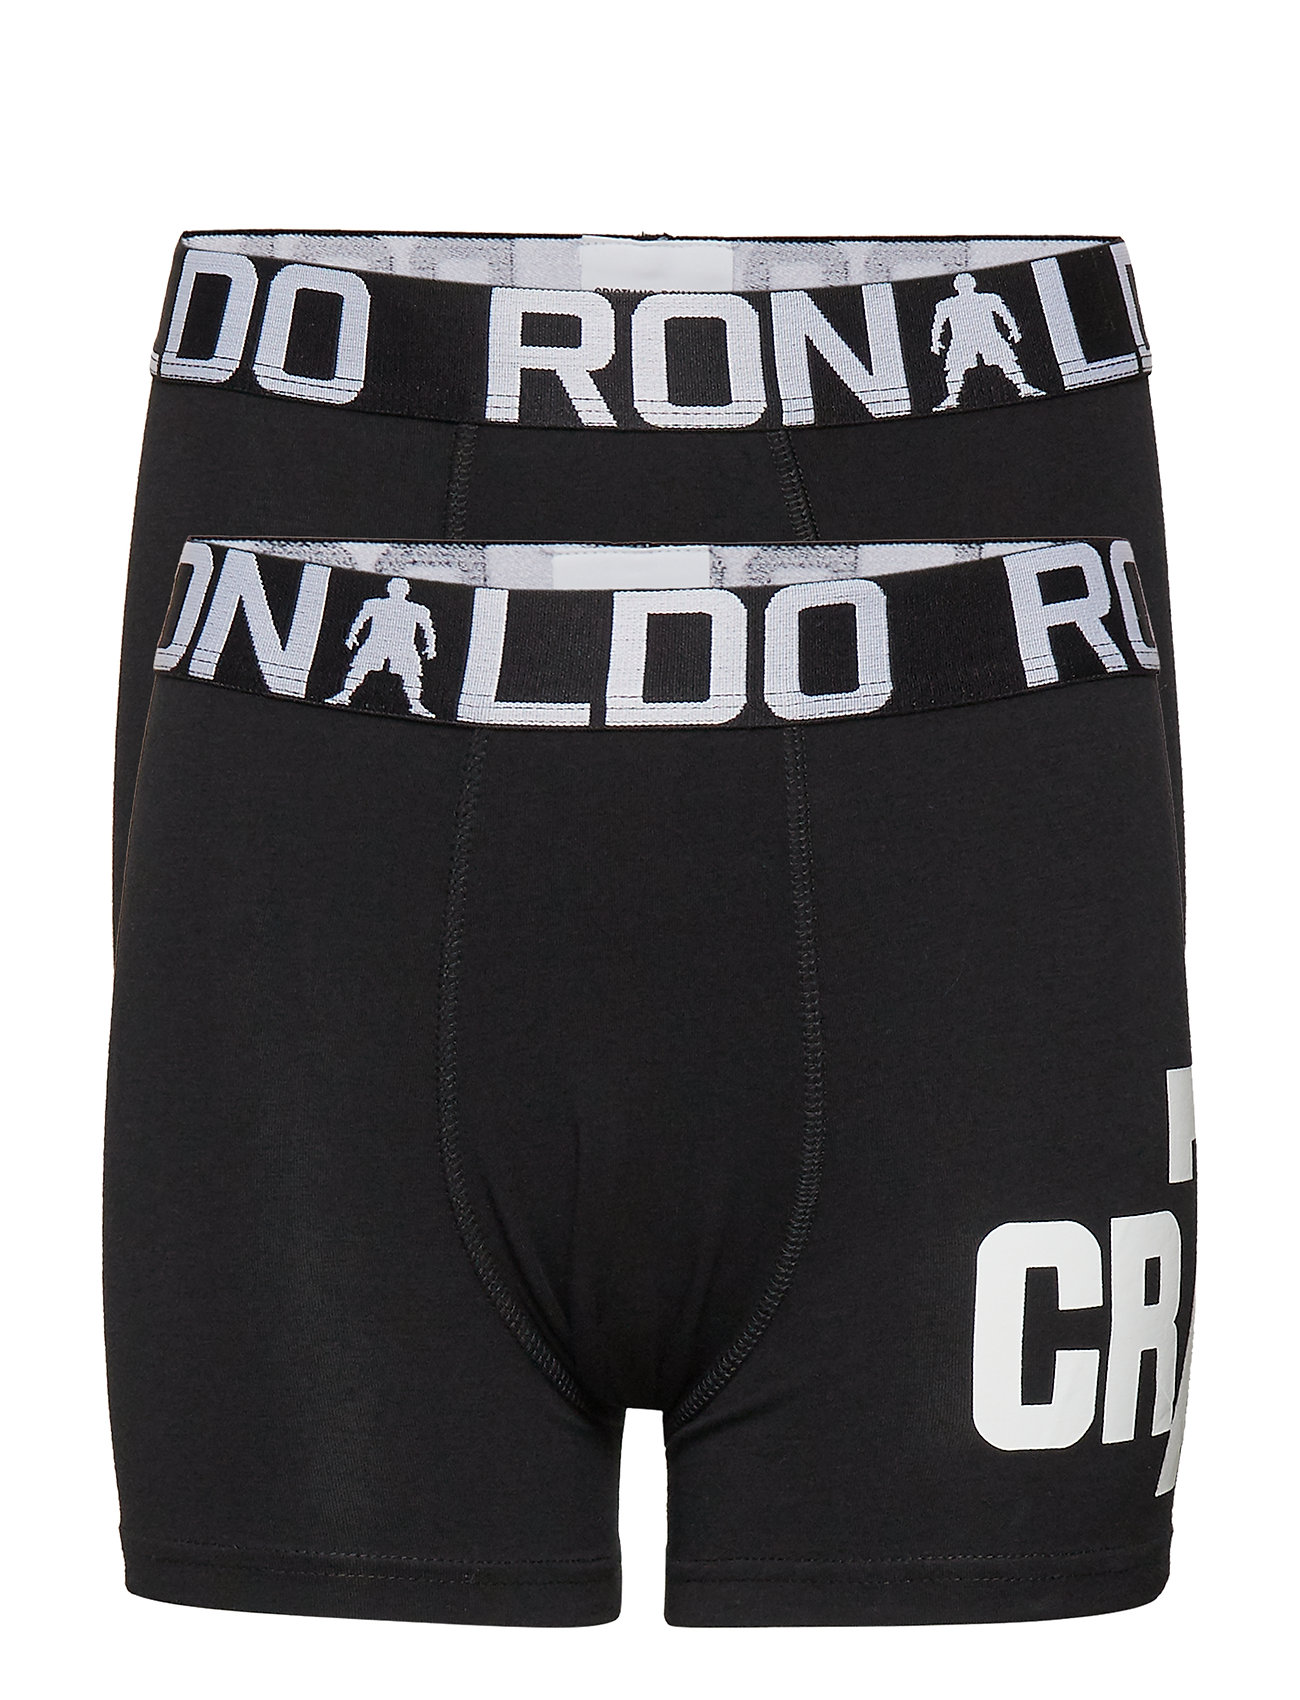 Cr7 Boys Trunk 2-Pack. Night & Underwear Underwear Underpants Black CR7